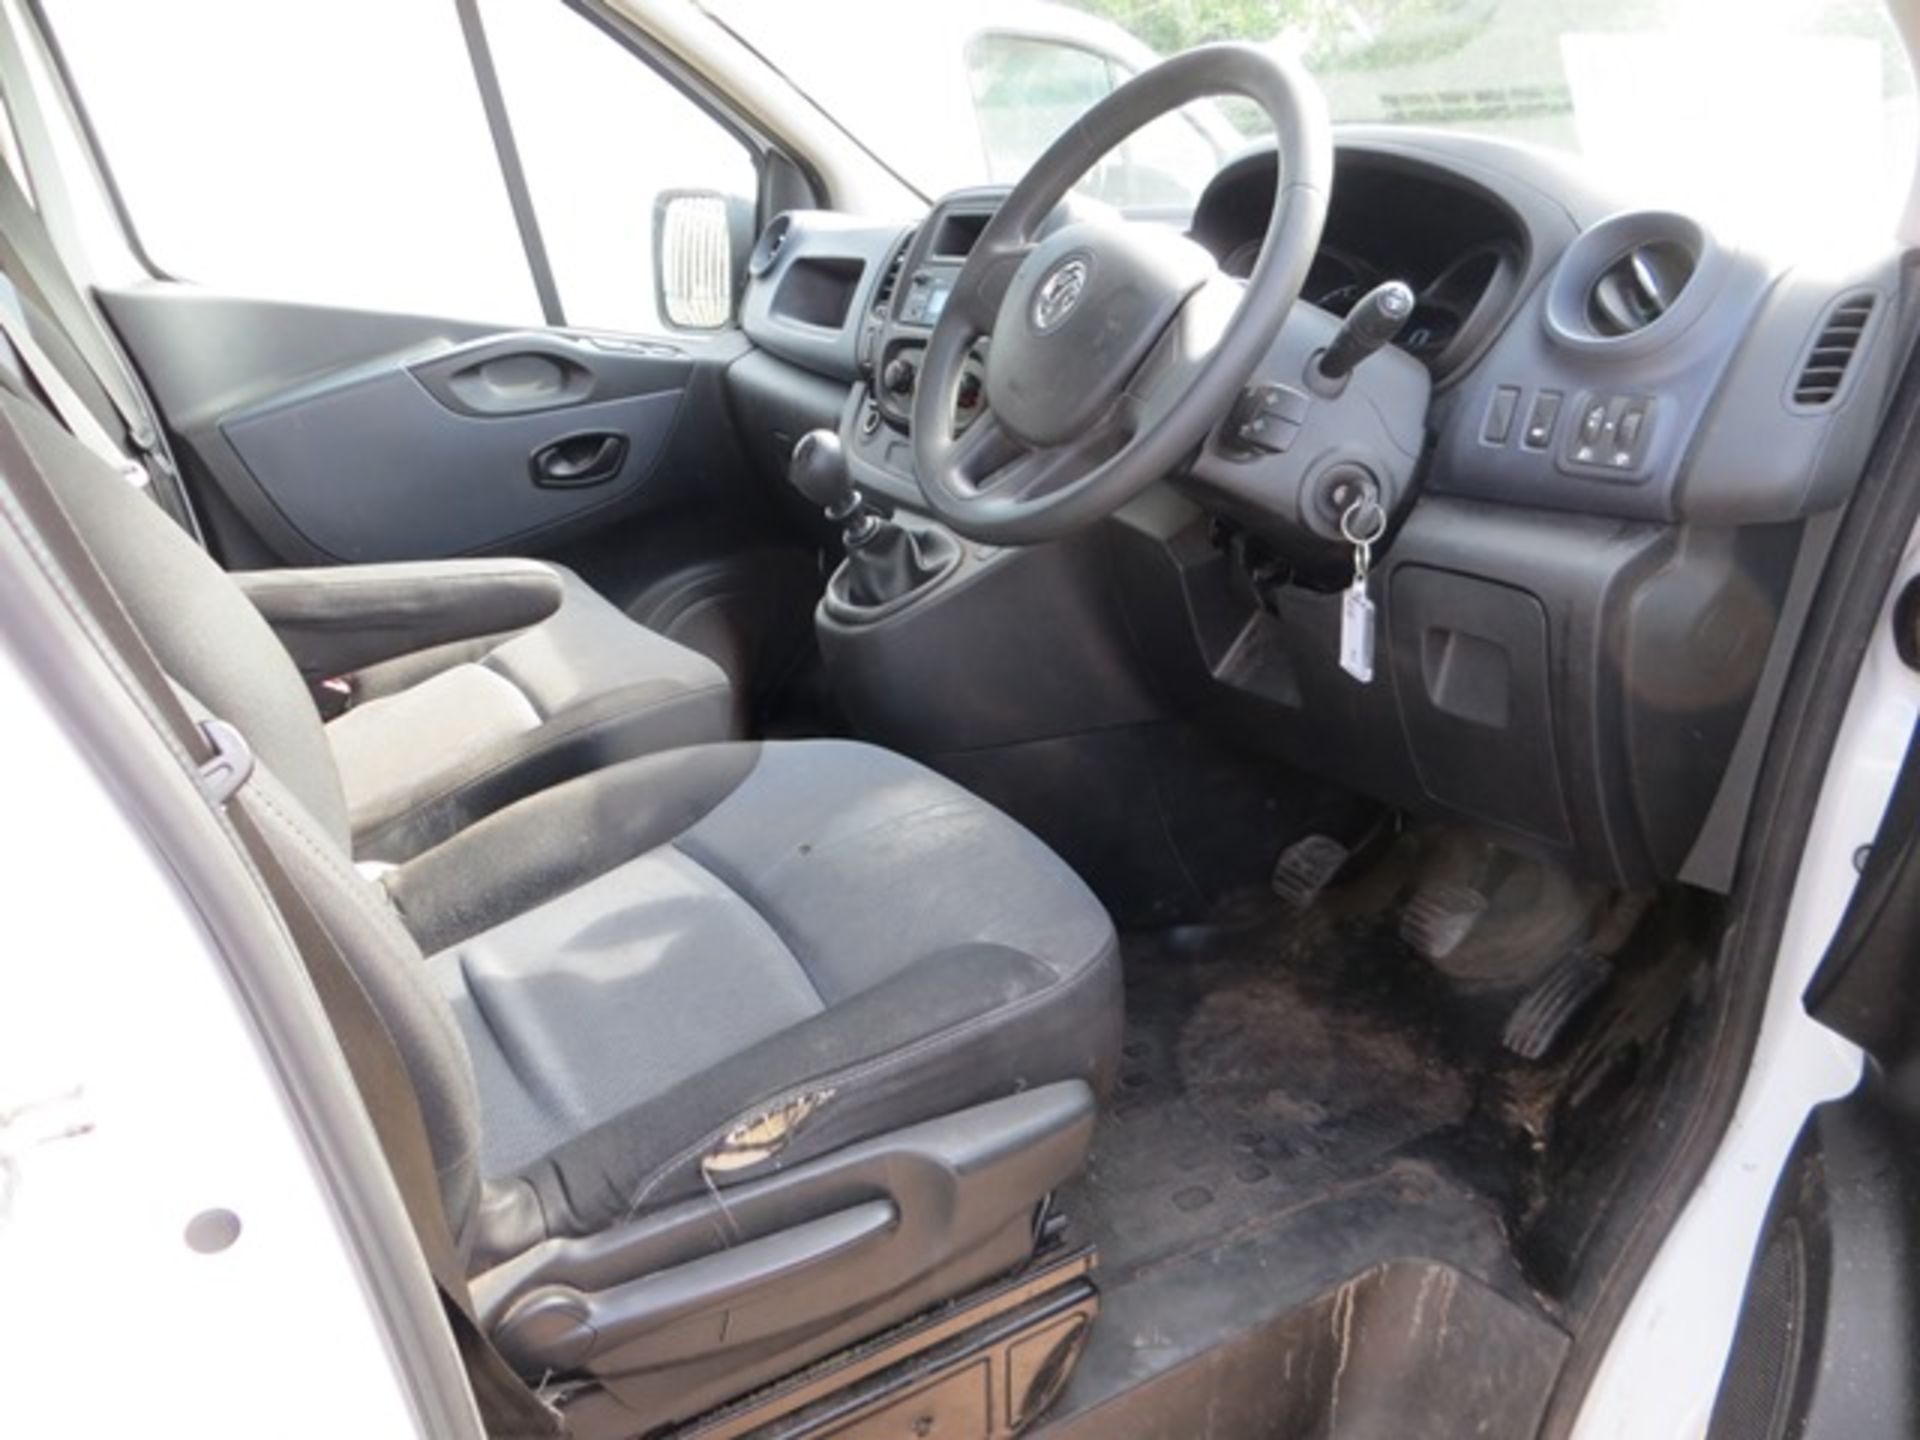 Vauxhall Vivaro 2700 CDTi 1.6 Diesel Panel Van c/w tow bar 1598cc Reg No GU16YWR DOR 30/04/2016 87, - Image 8 of 8